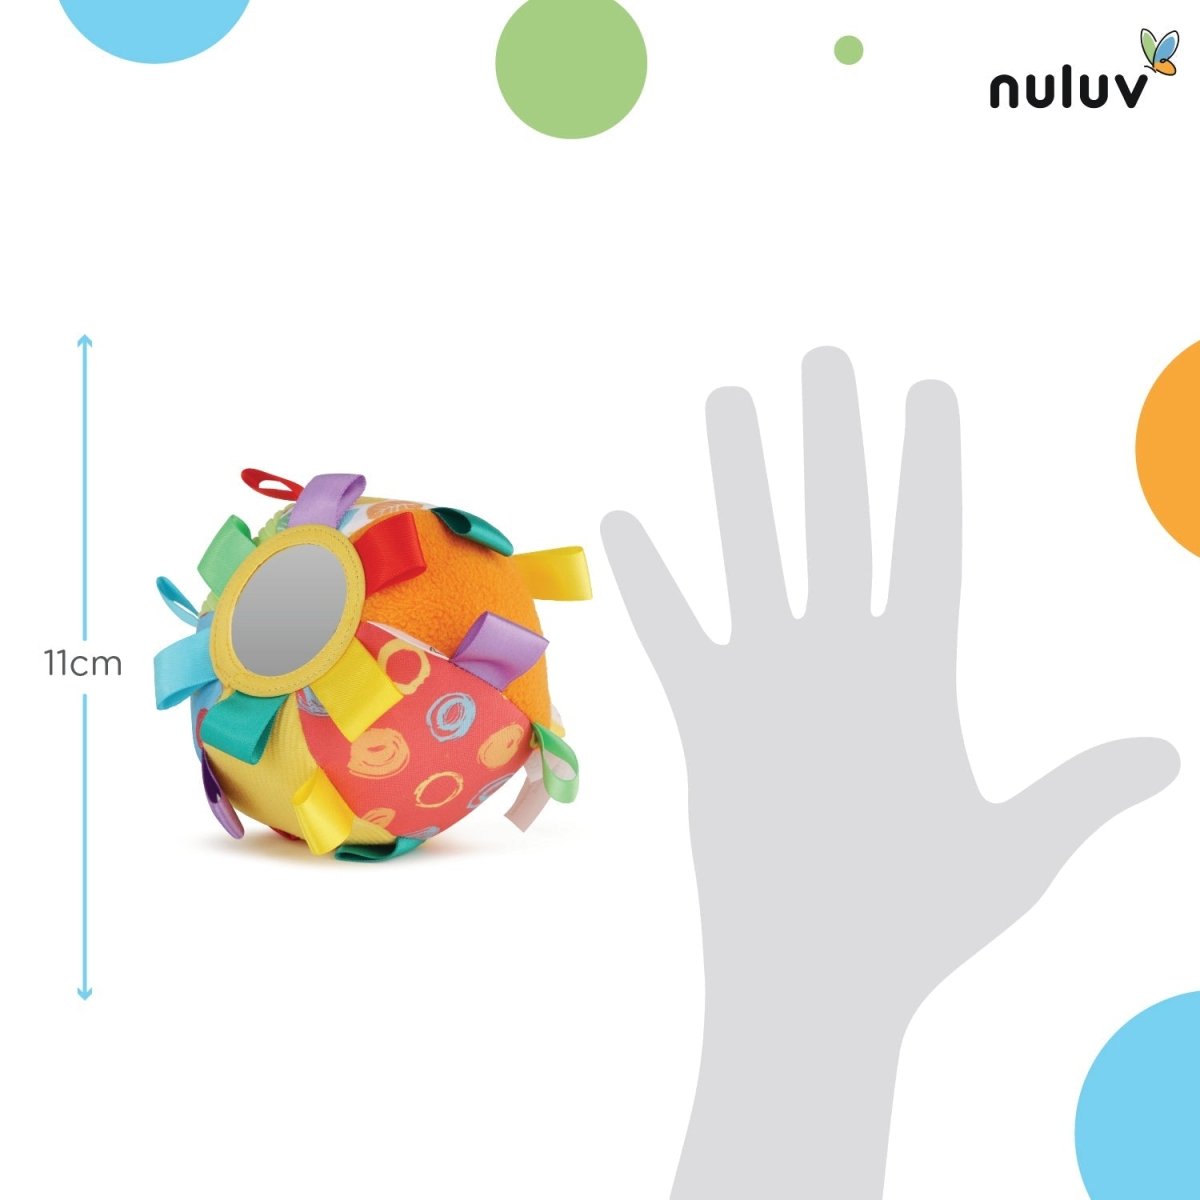 Nuluv Activity Ball-2- Mirror - NU-I-0008